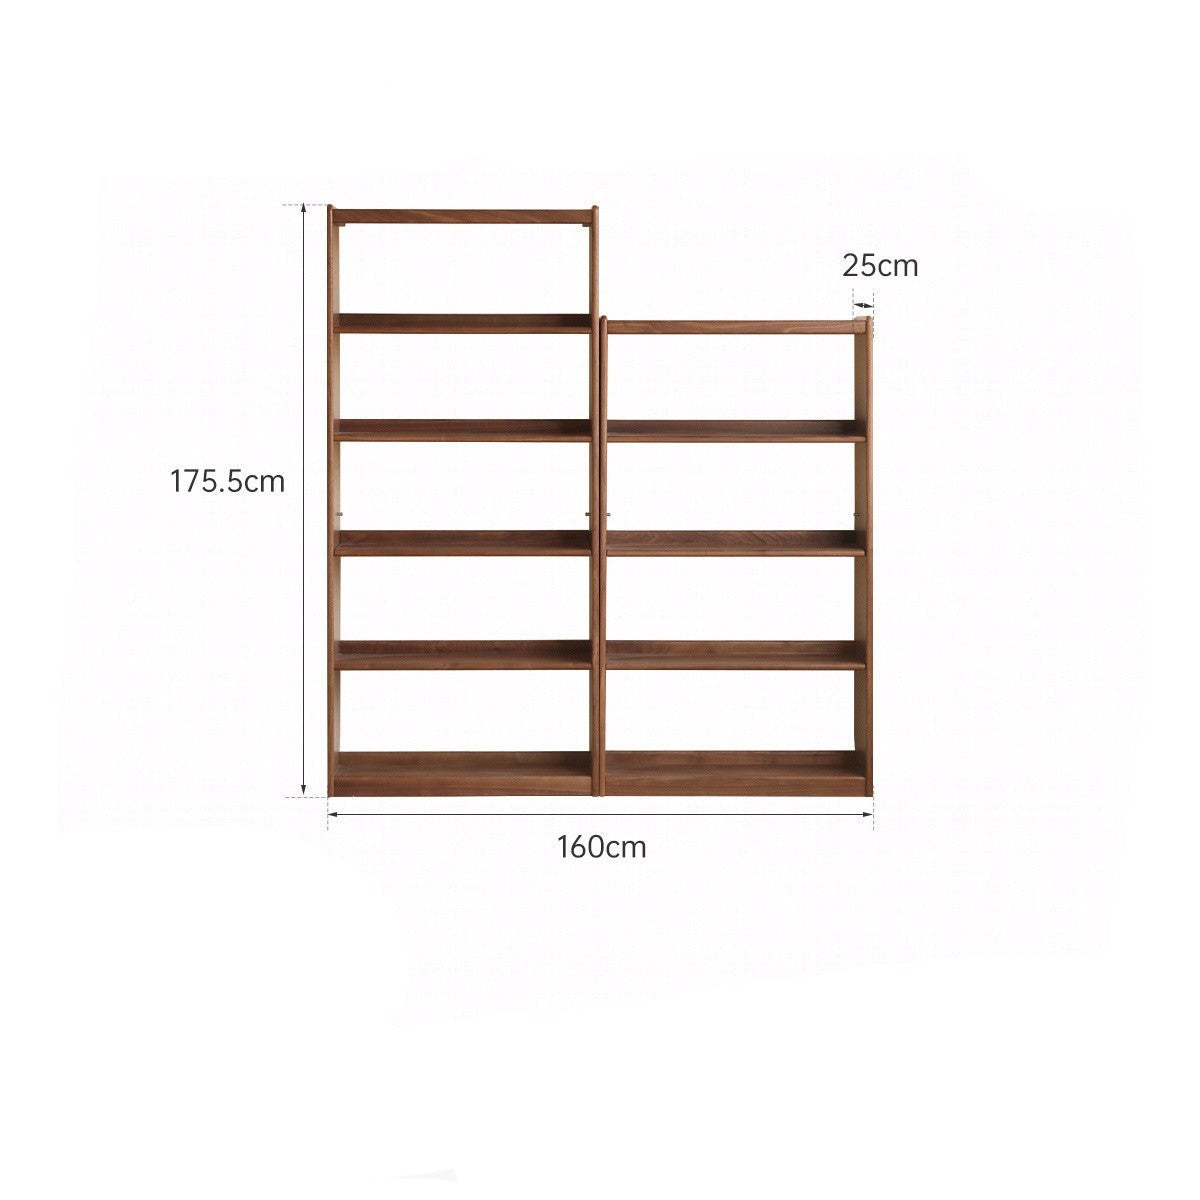 Black walnut solid wood bookshelf can be combined bookcase display cabinet wall shelf"